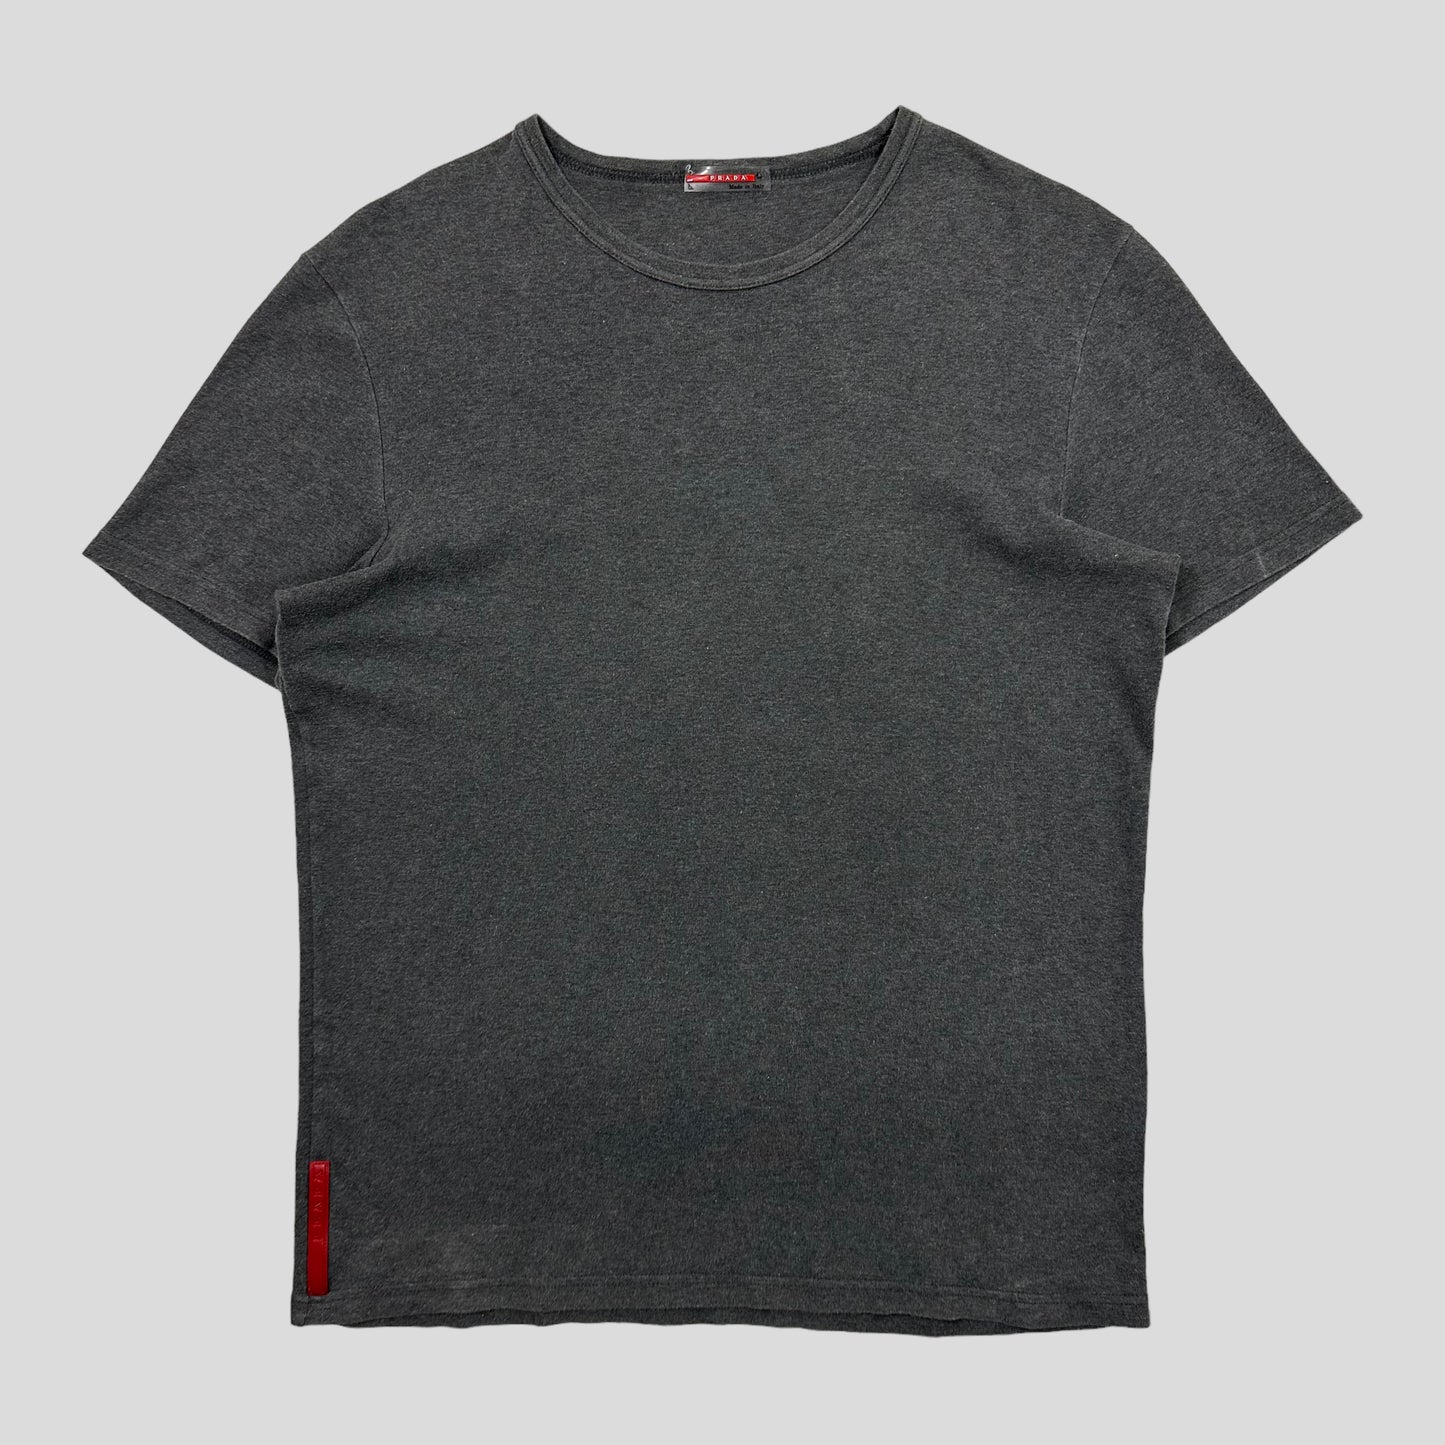 Prada Sport 00’s Red Tab T-shirt - M